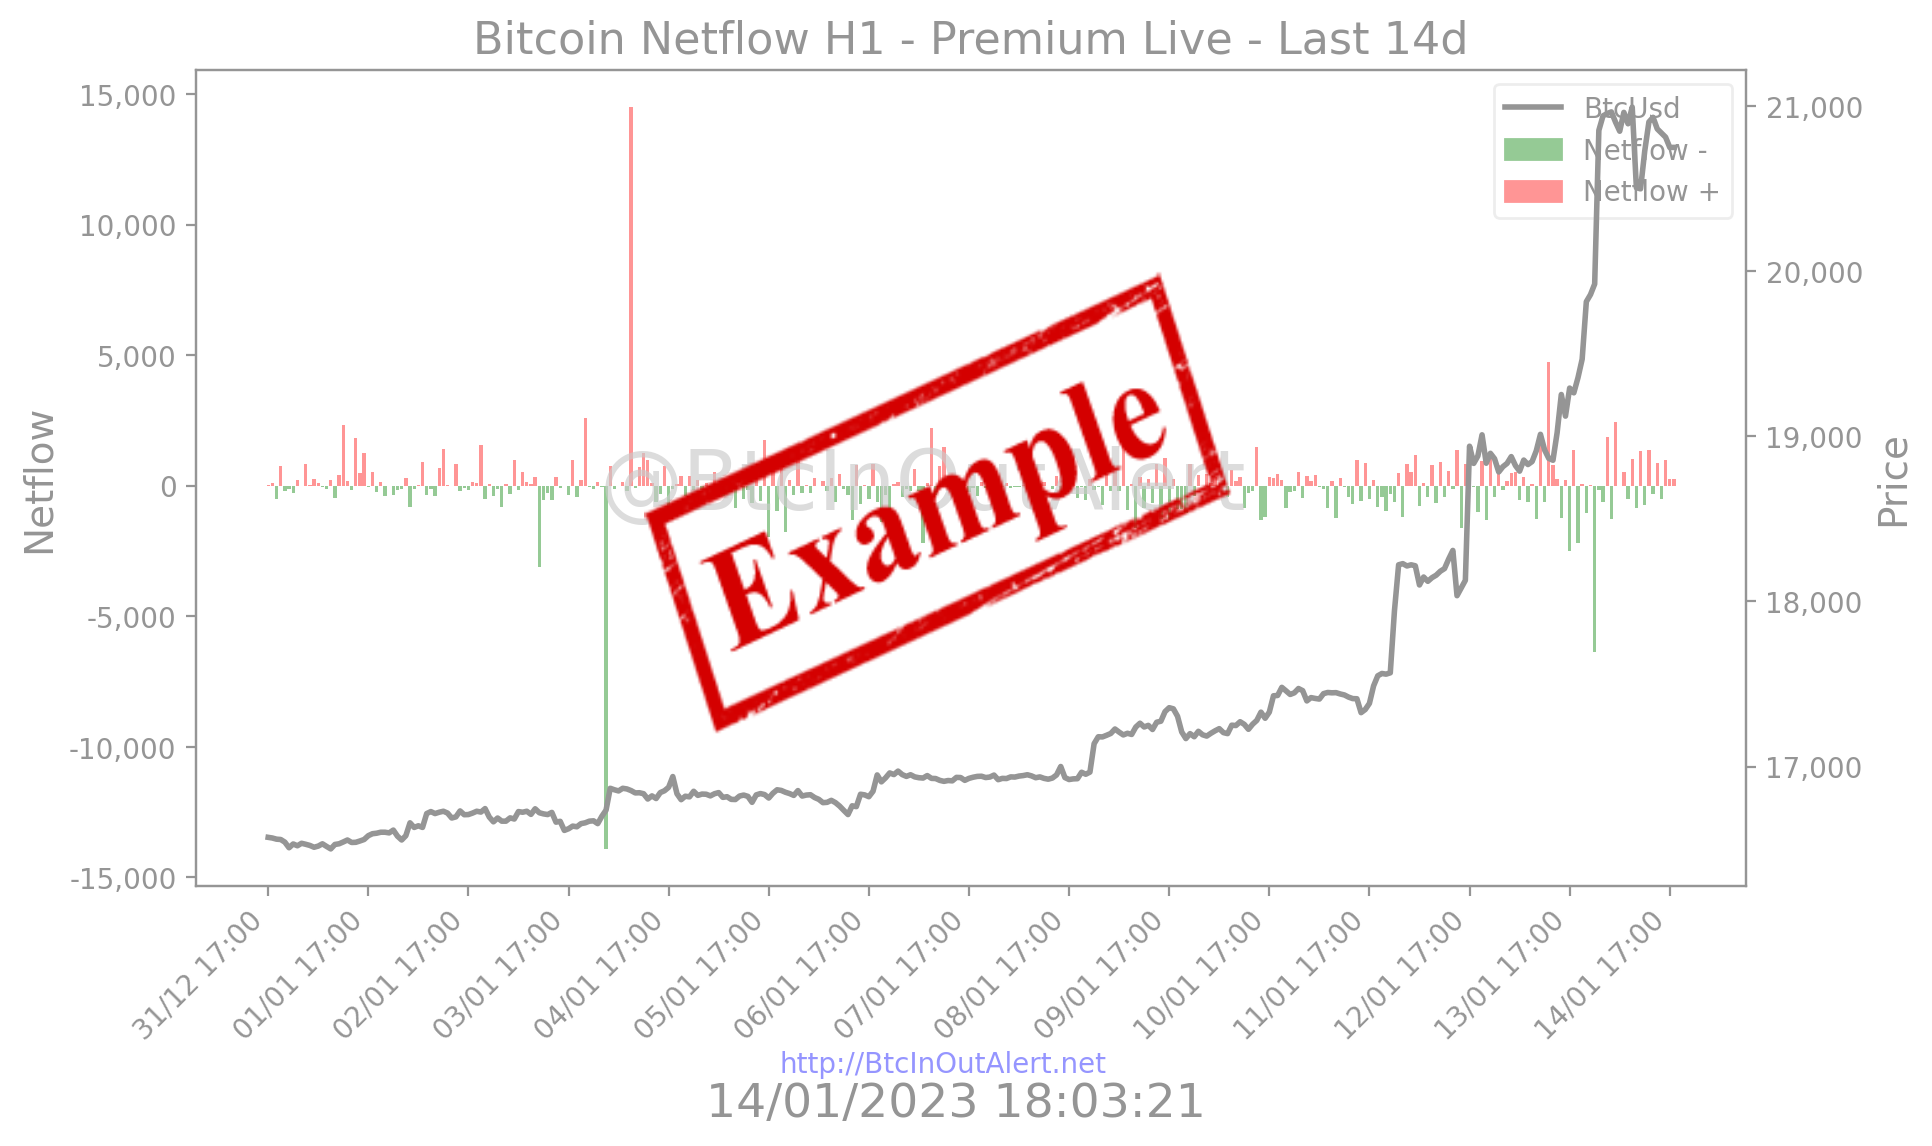 Bitcoin Netflow H1